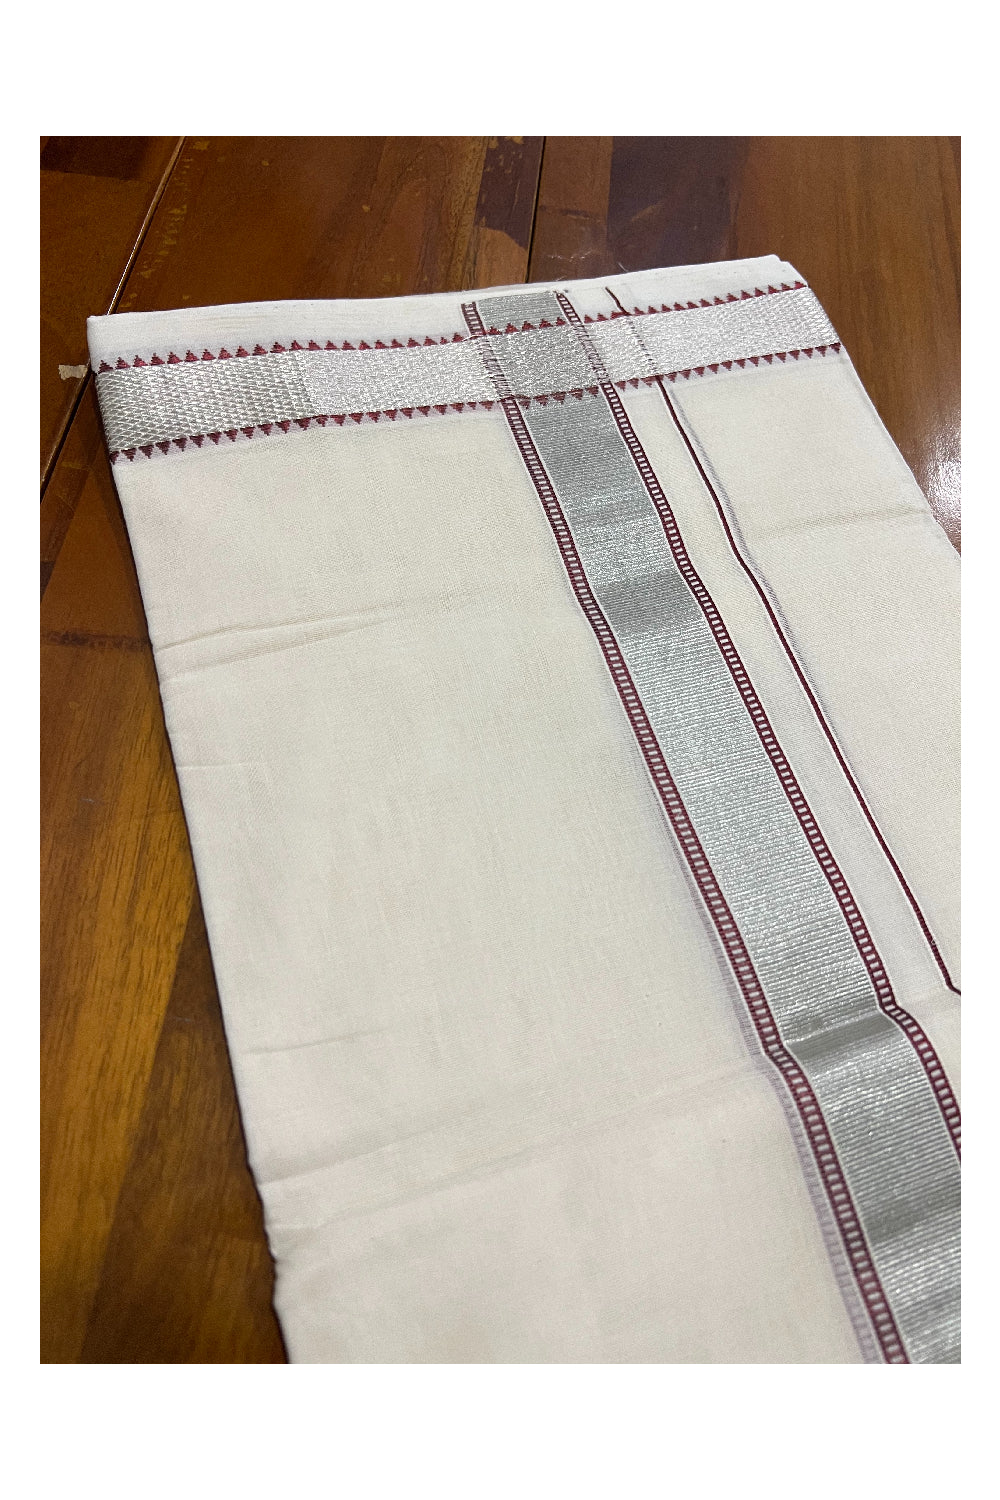 Southloom Kuthampully Handloom Pure Cotton Mundu with Silver and Purple Kasavu Designer Border (South Indian Dhoti)